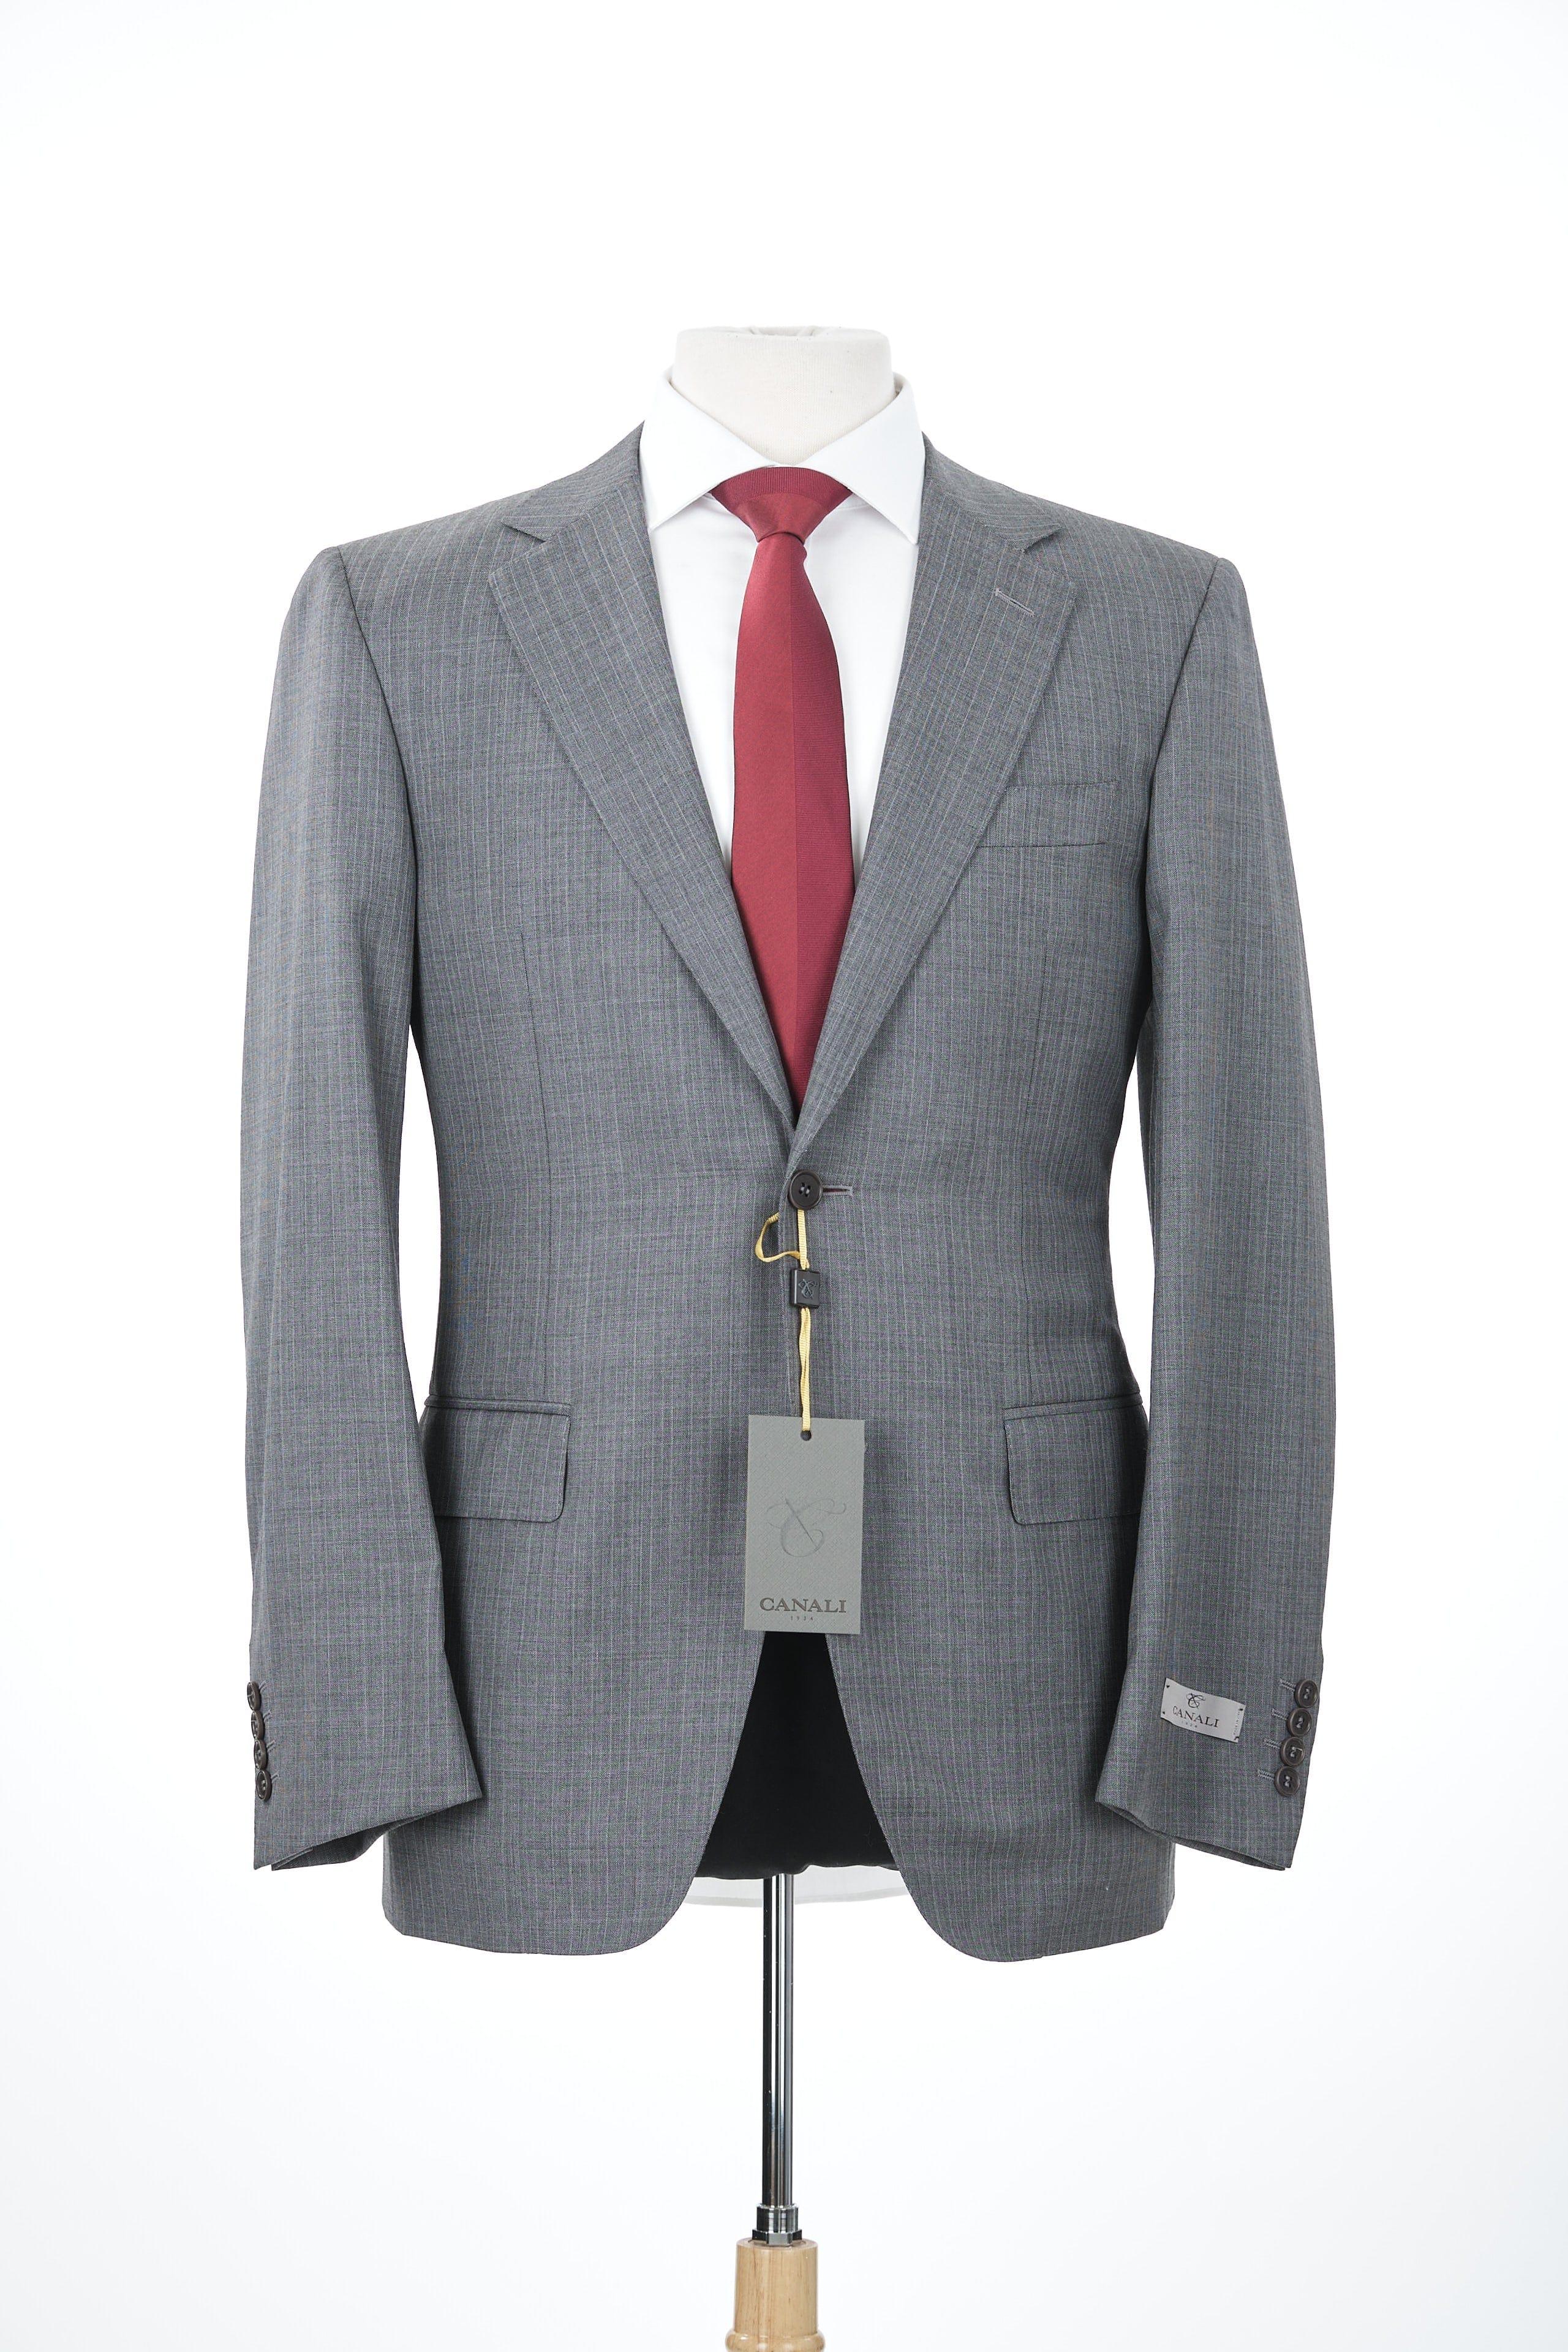 Canali 1934 Gray Herringbone Pinstripe 100% Wool Suit 44r (54 Eu ...